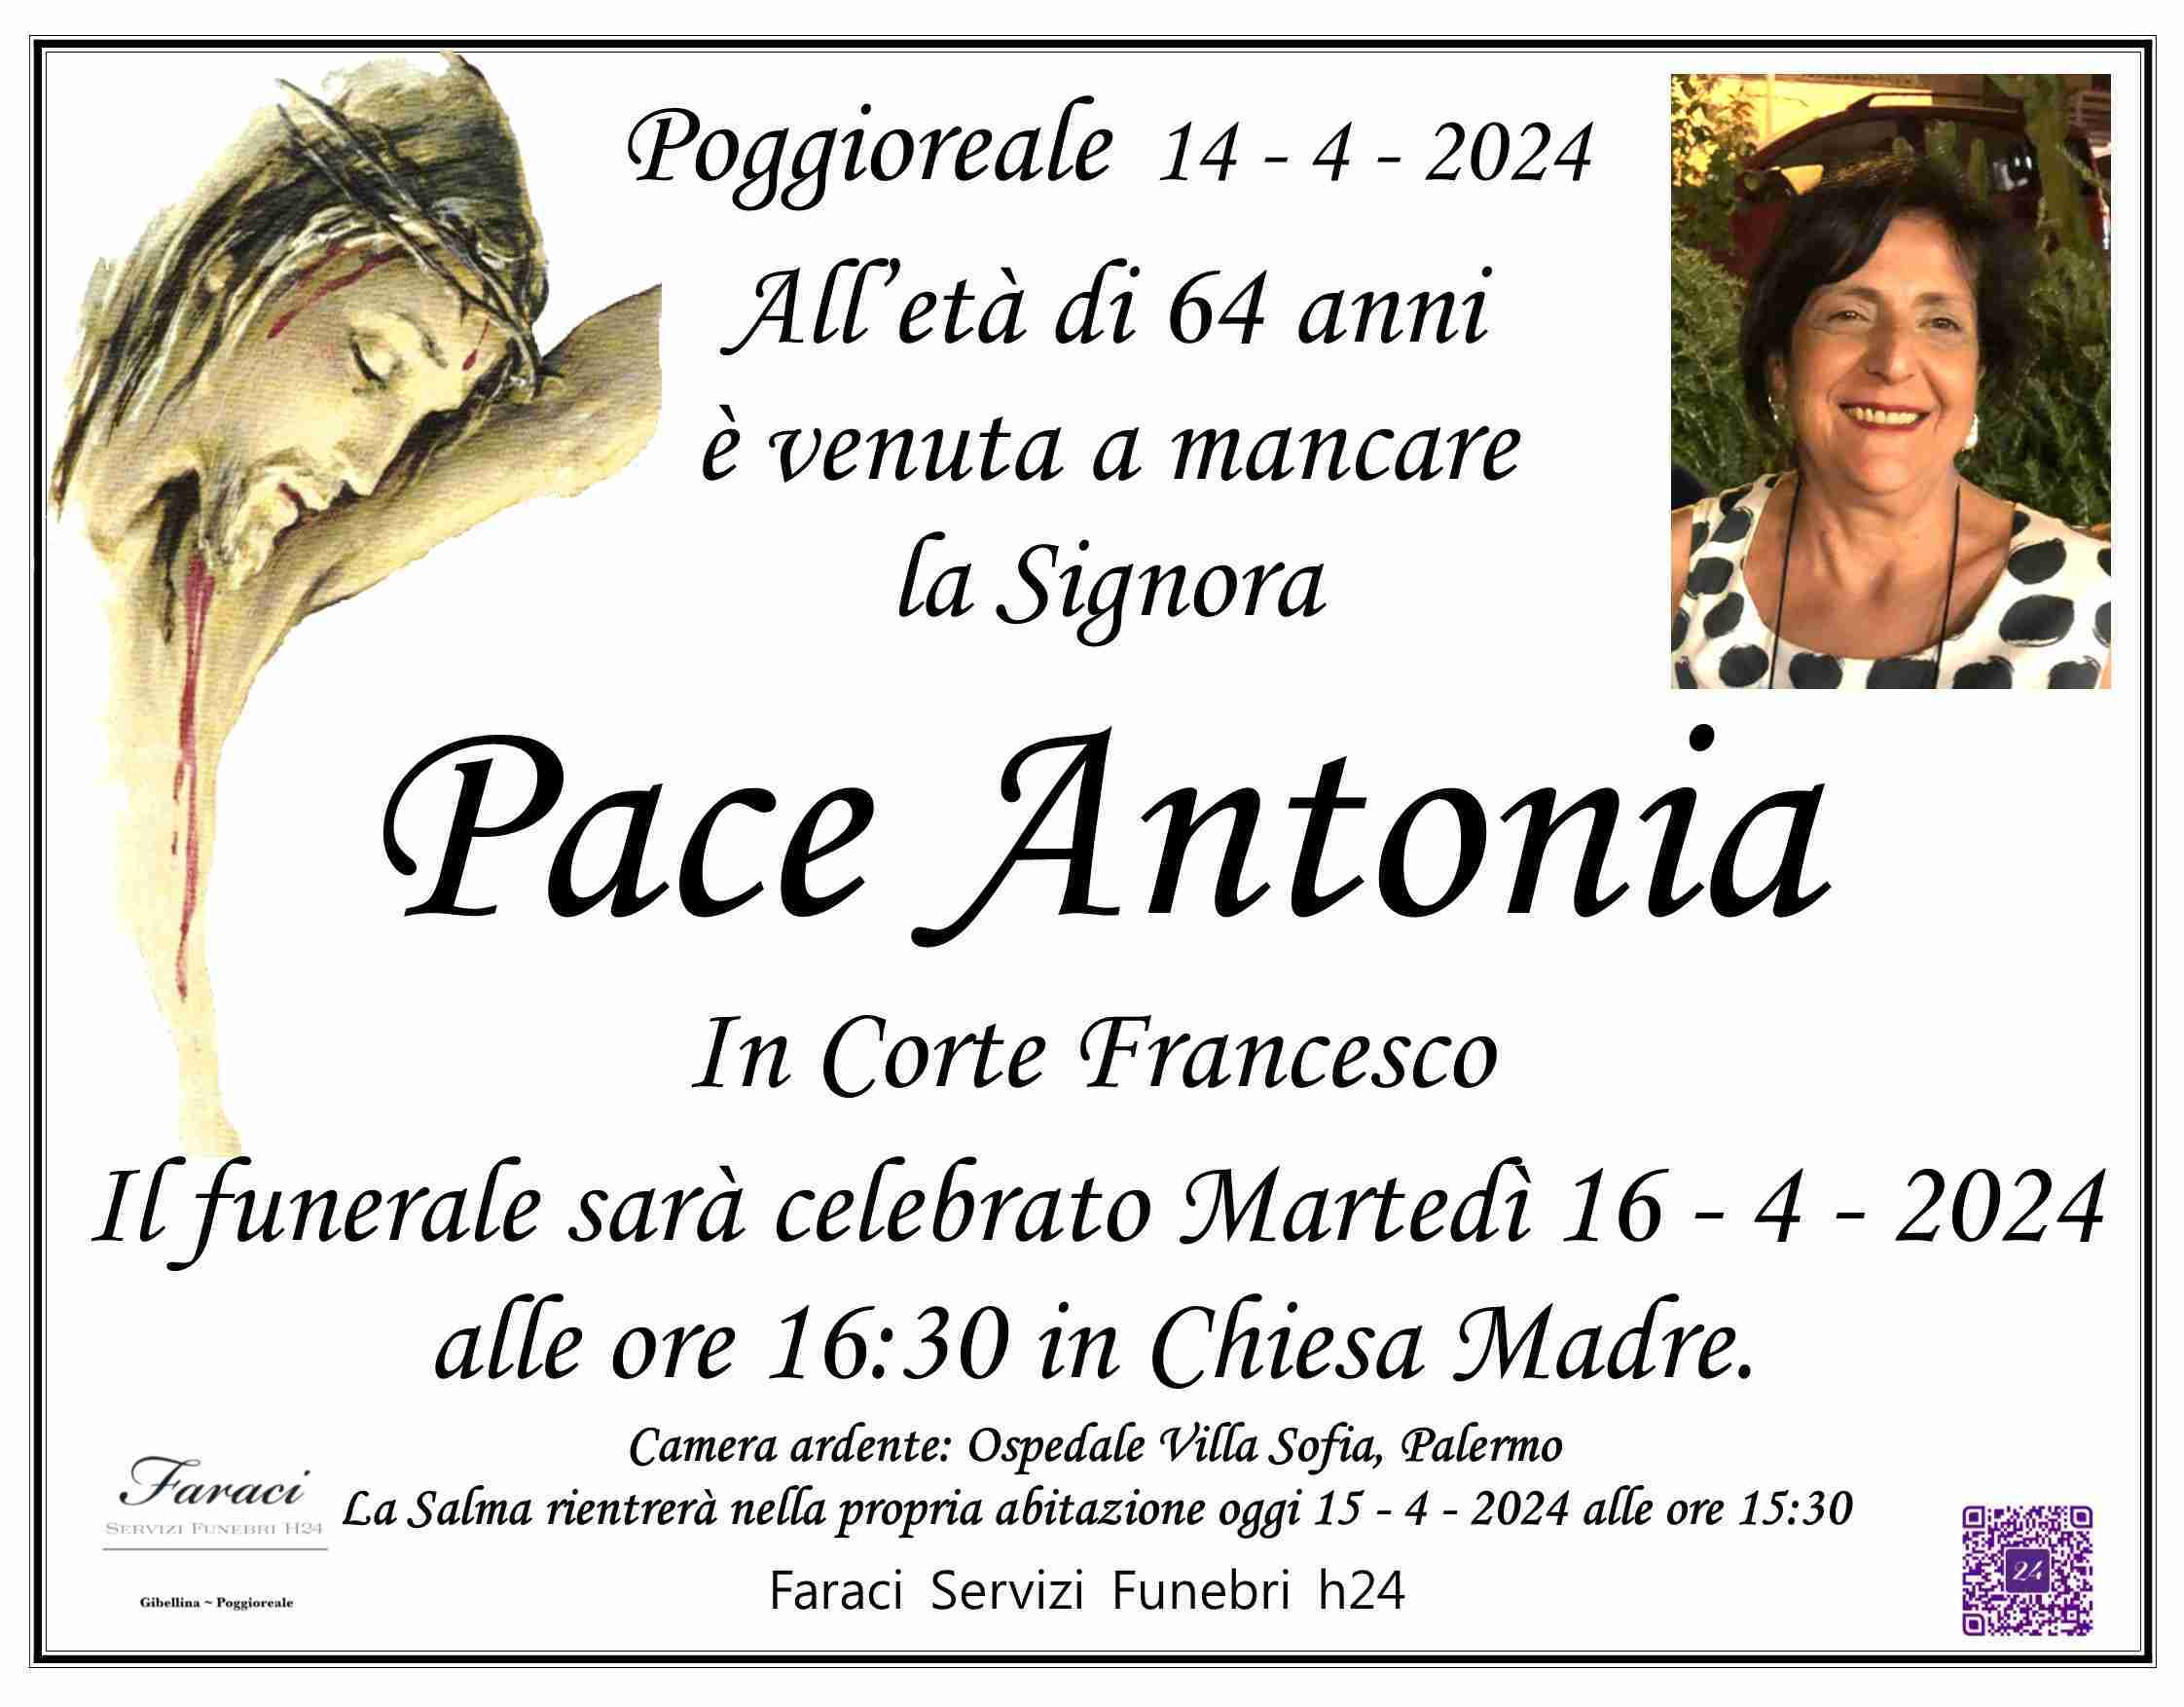 Antonia Pace